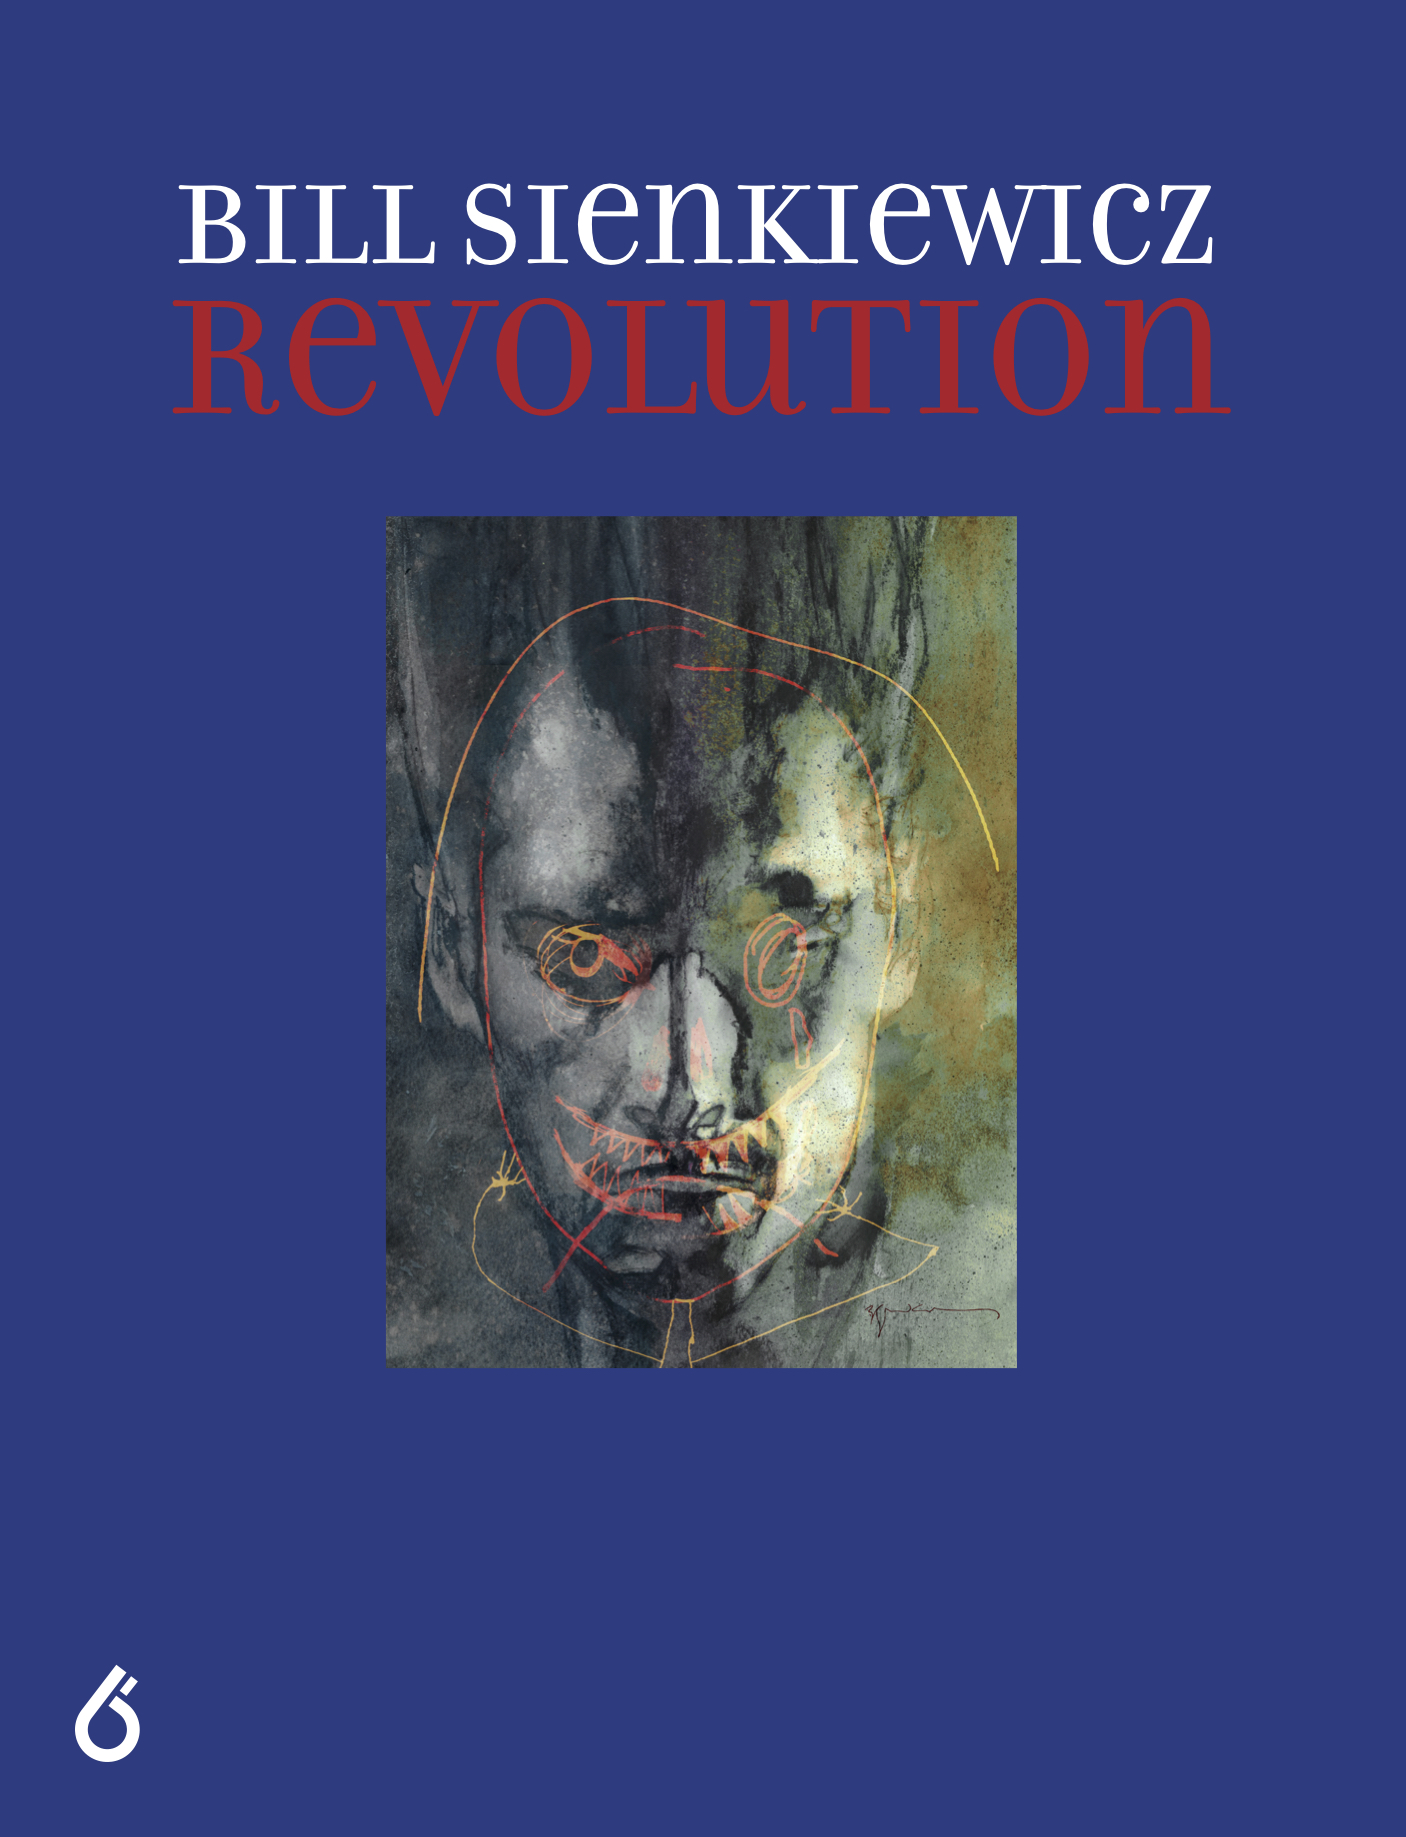 Bill Sienkiewicz: Revolution, Vol. I Trade Edition Cover